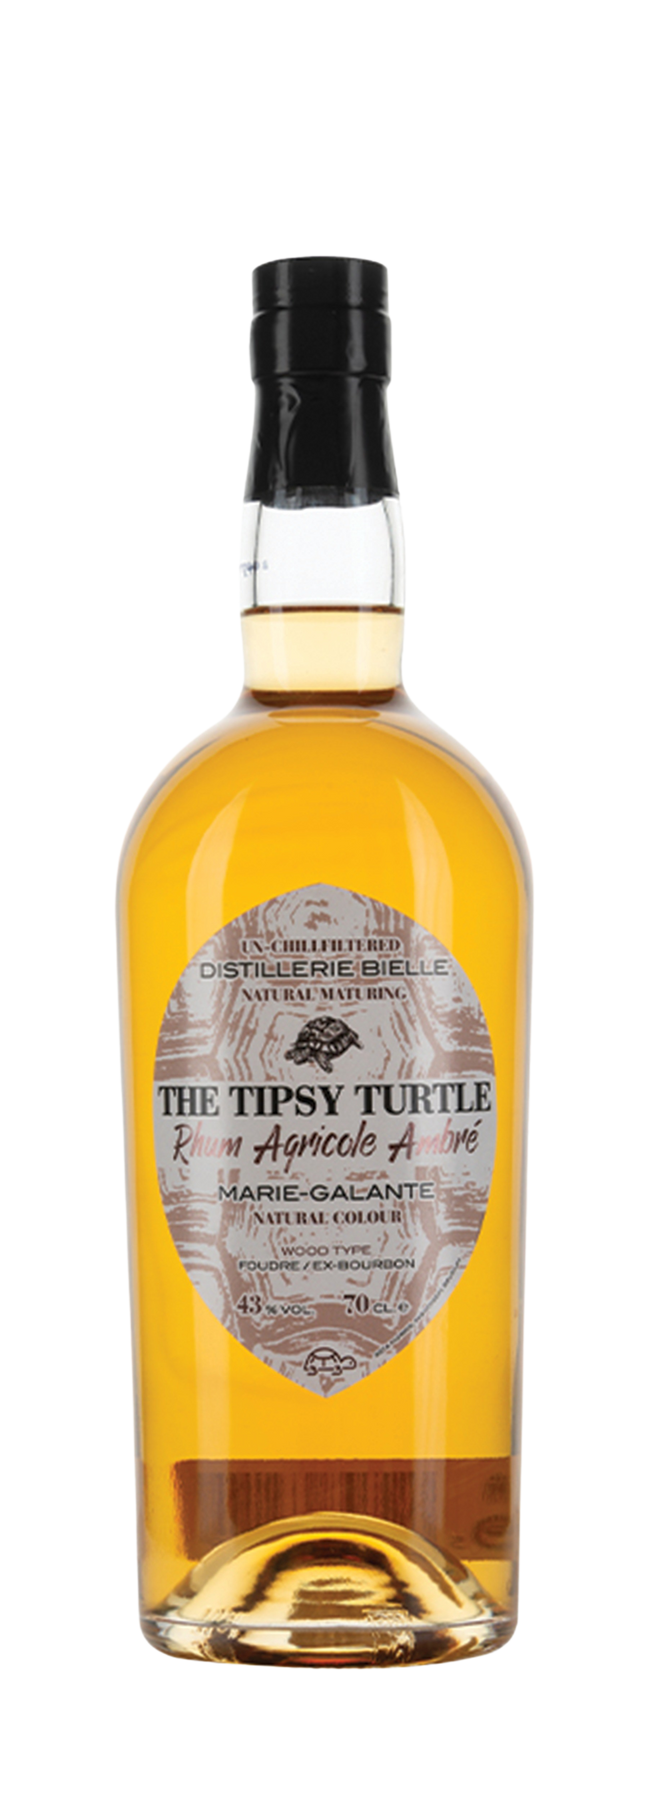 The Tipsy Turtle Rasta morris 43% 70cl